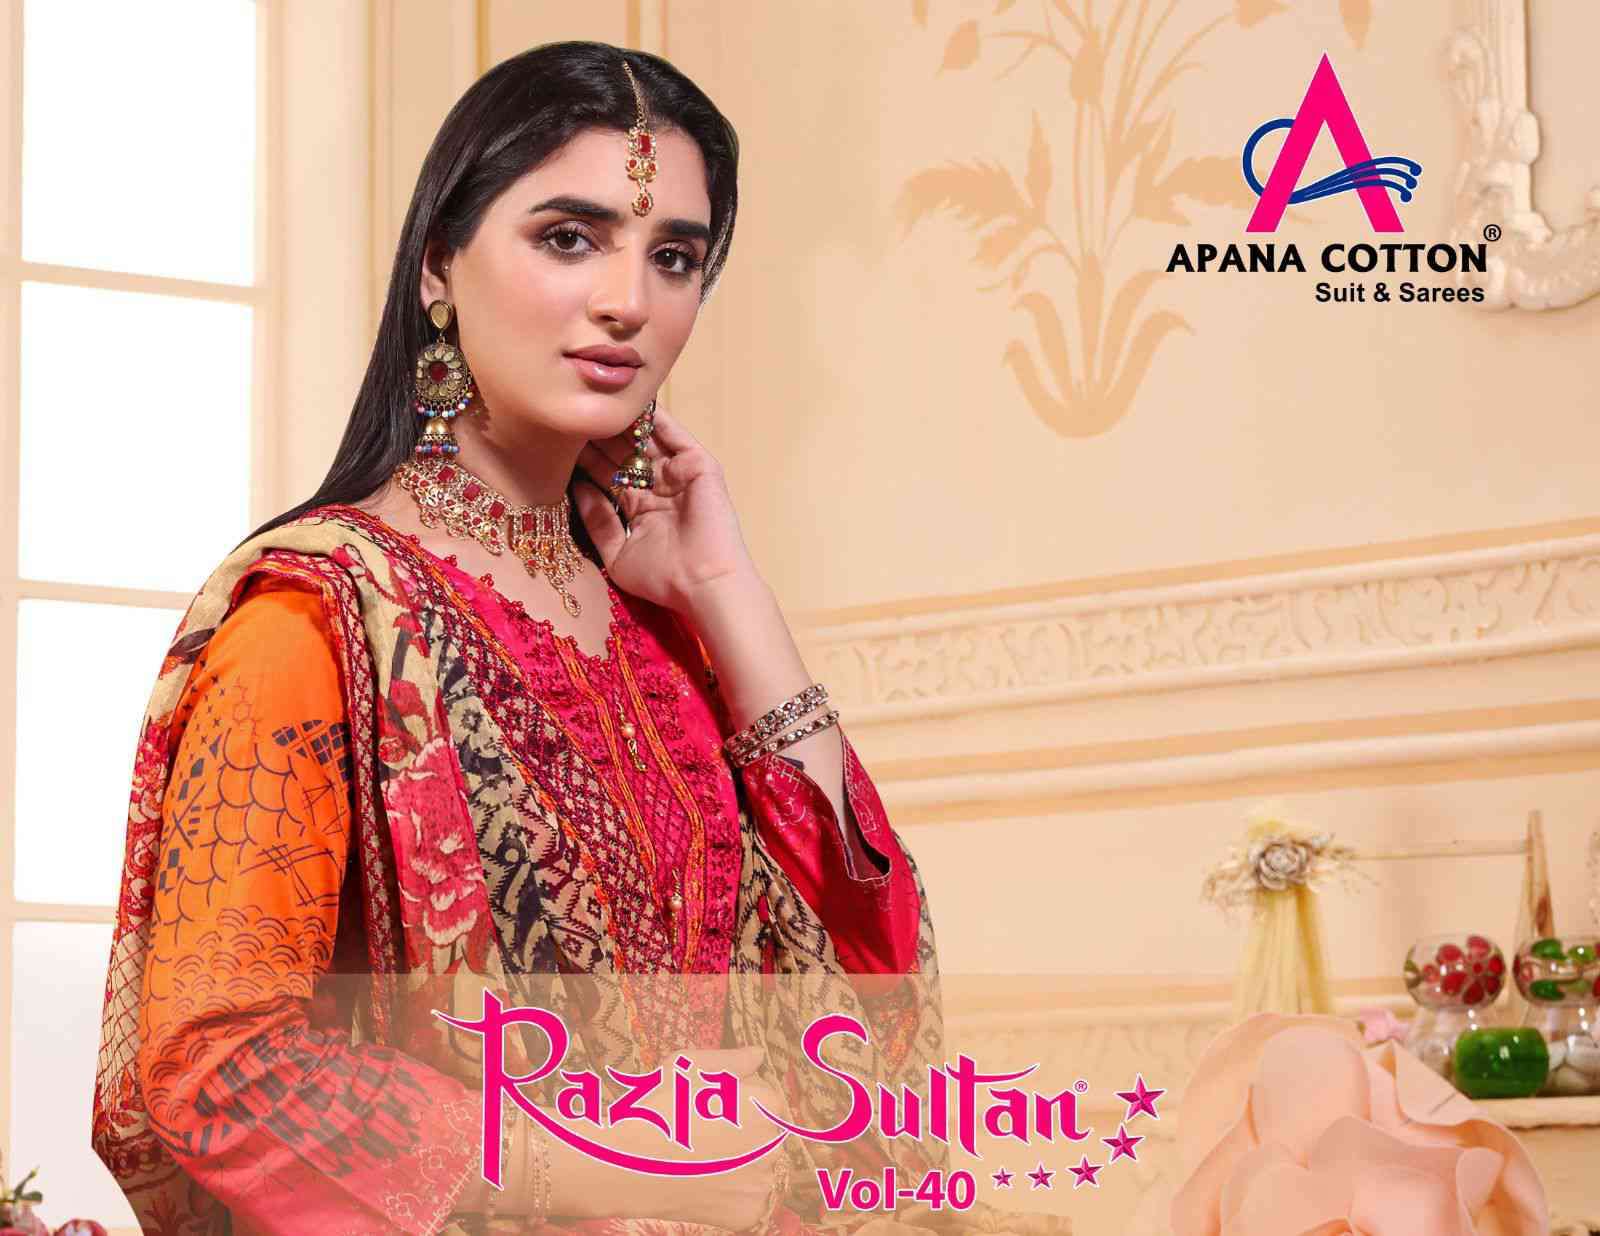 Apana Cotton Razia Sultan Vol 40 Printed Cotton Dress Material Wholesaler